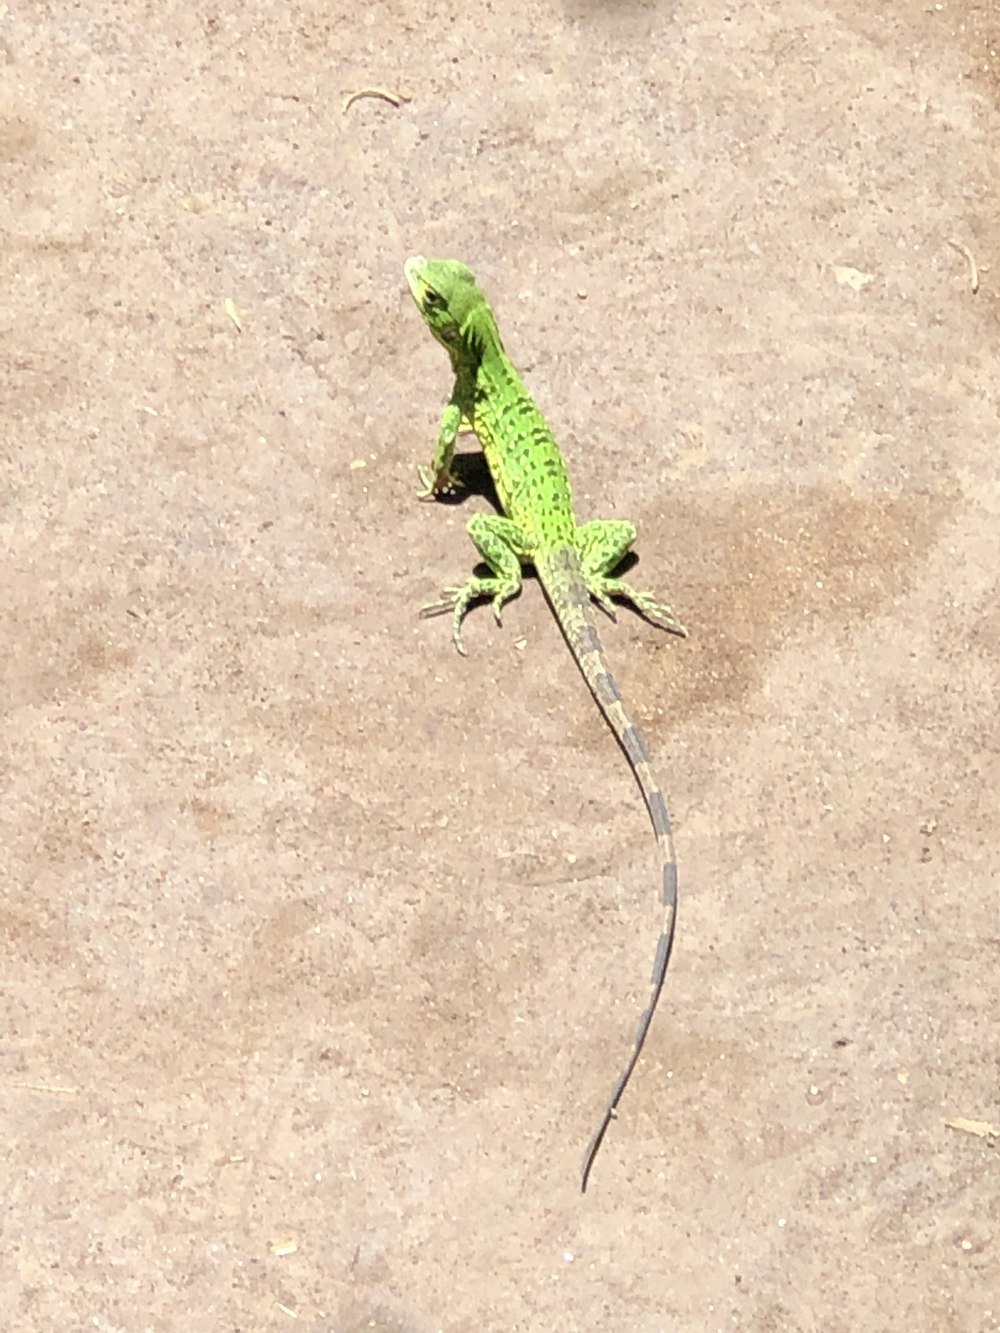 green lizard on brown sand